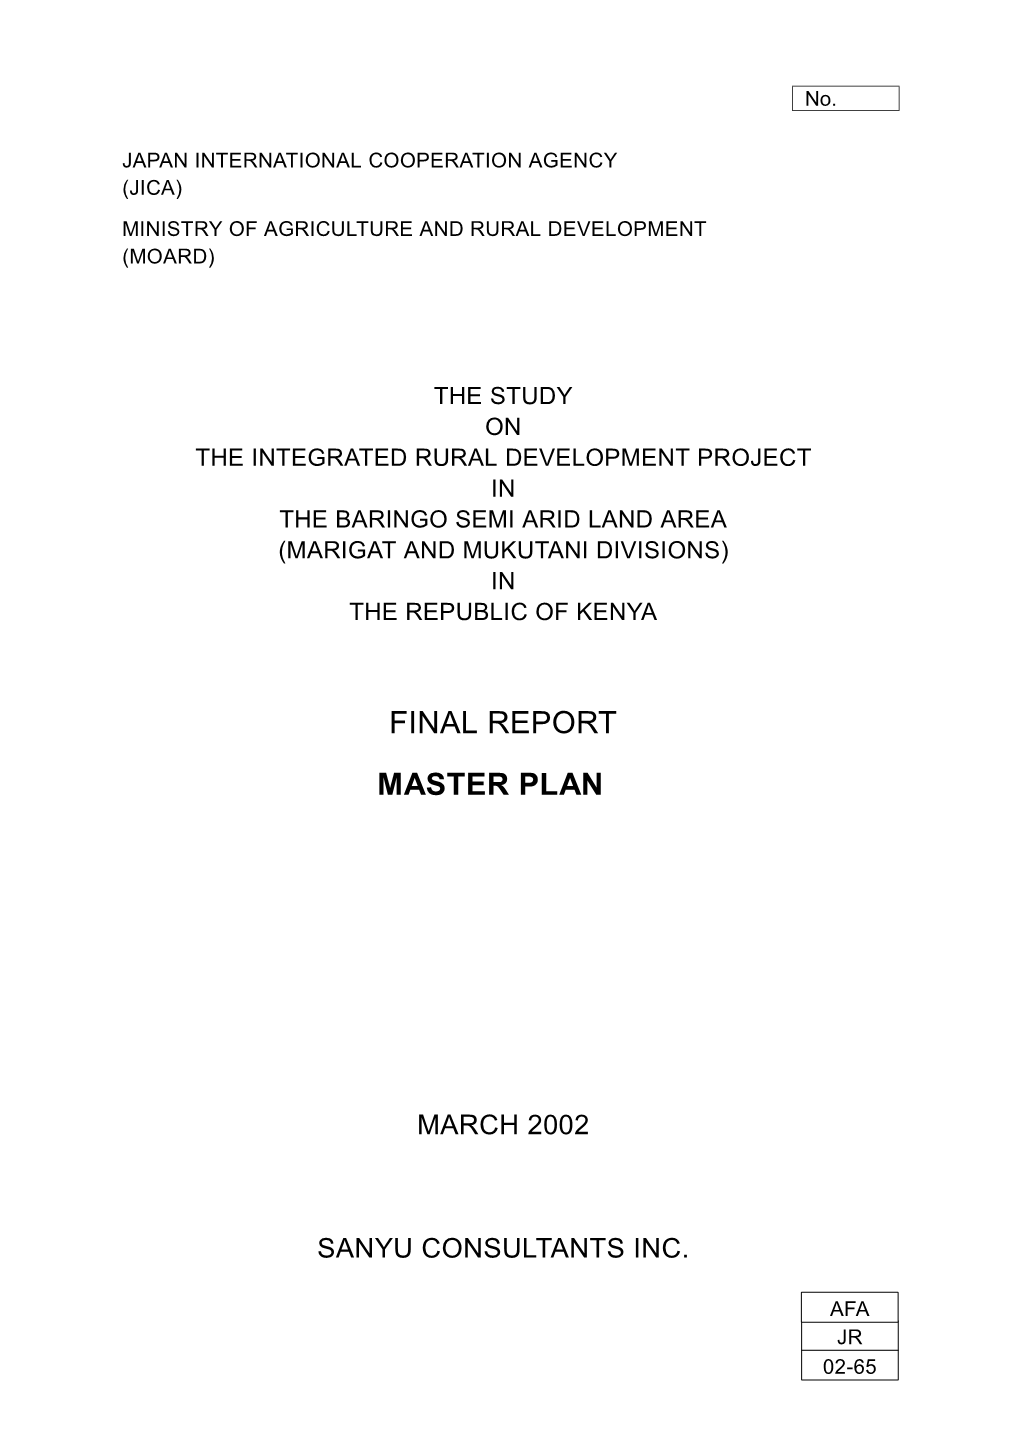 Final Report Master Plan